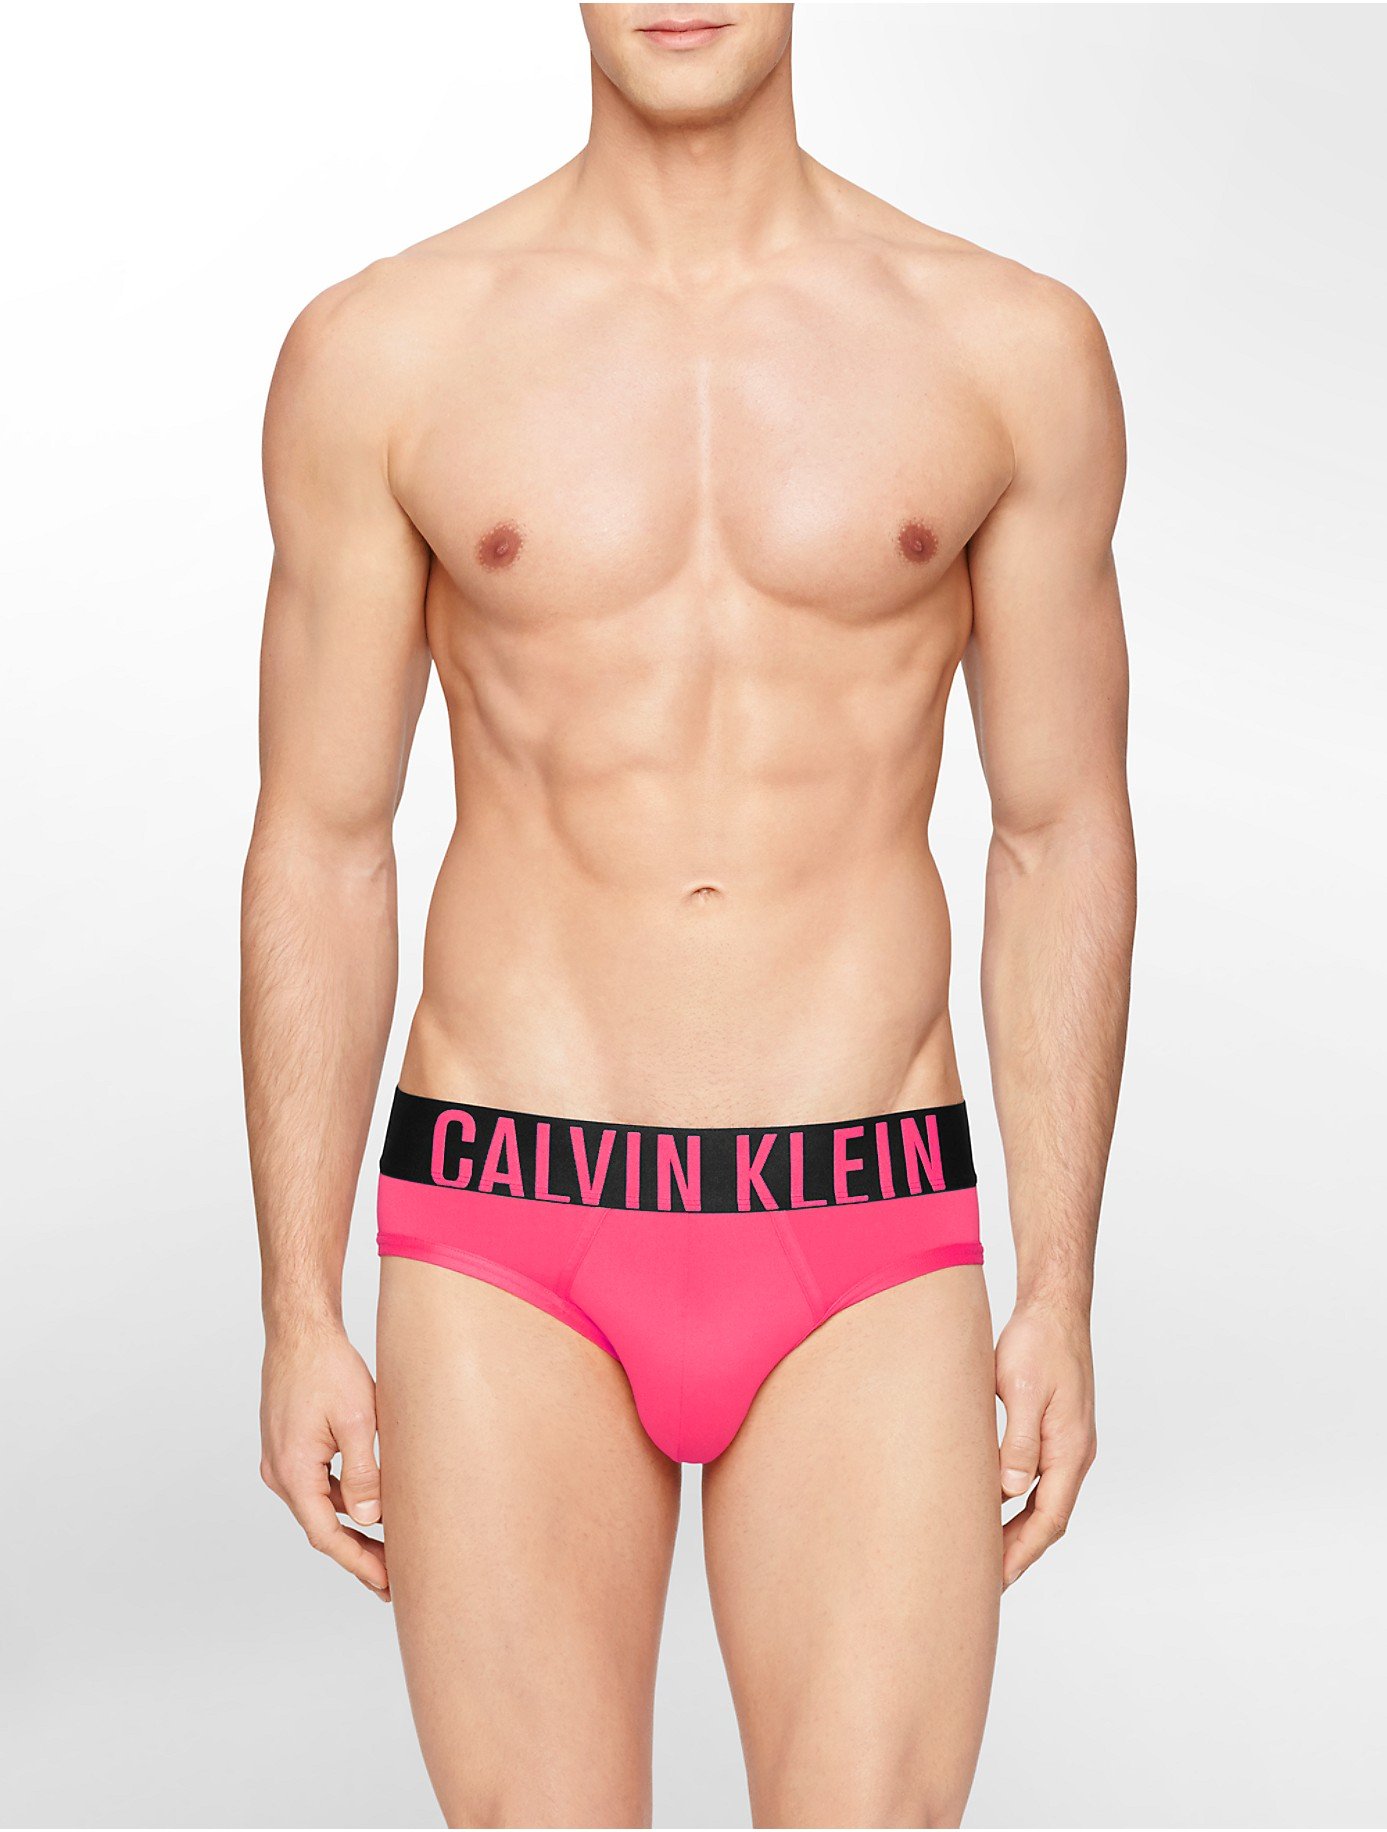 Calvin Klein Pink Briefs La France, SAVE 39% - mpgc.net